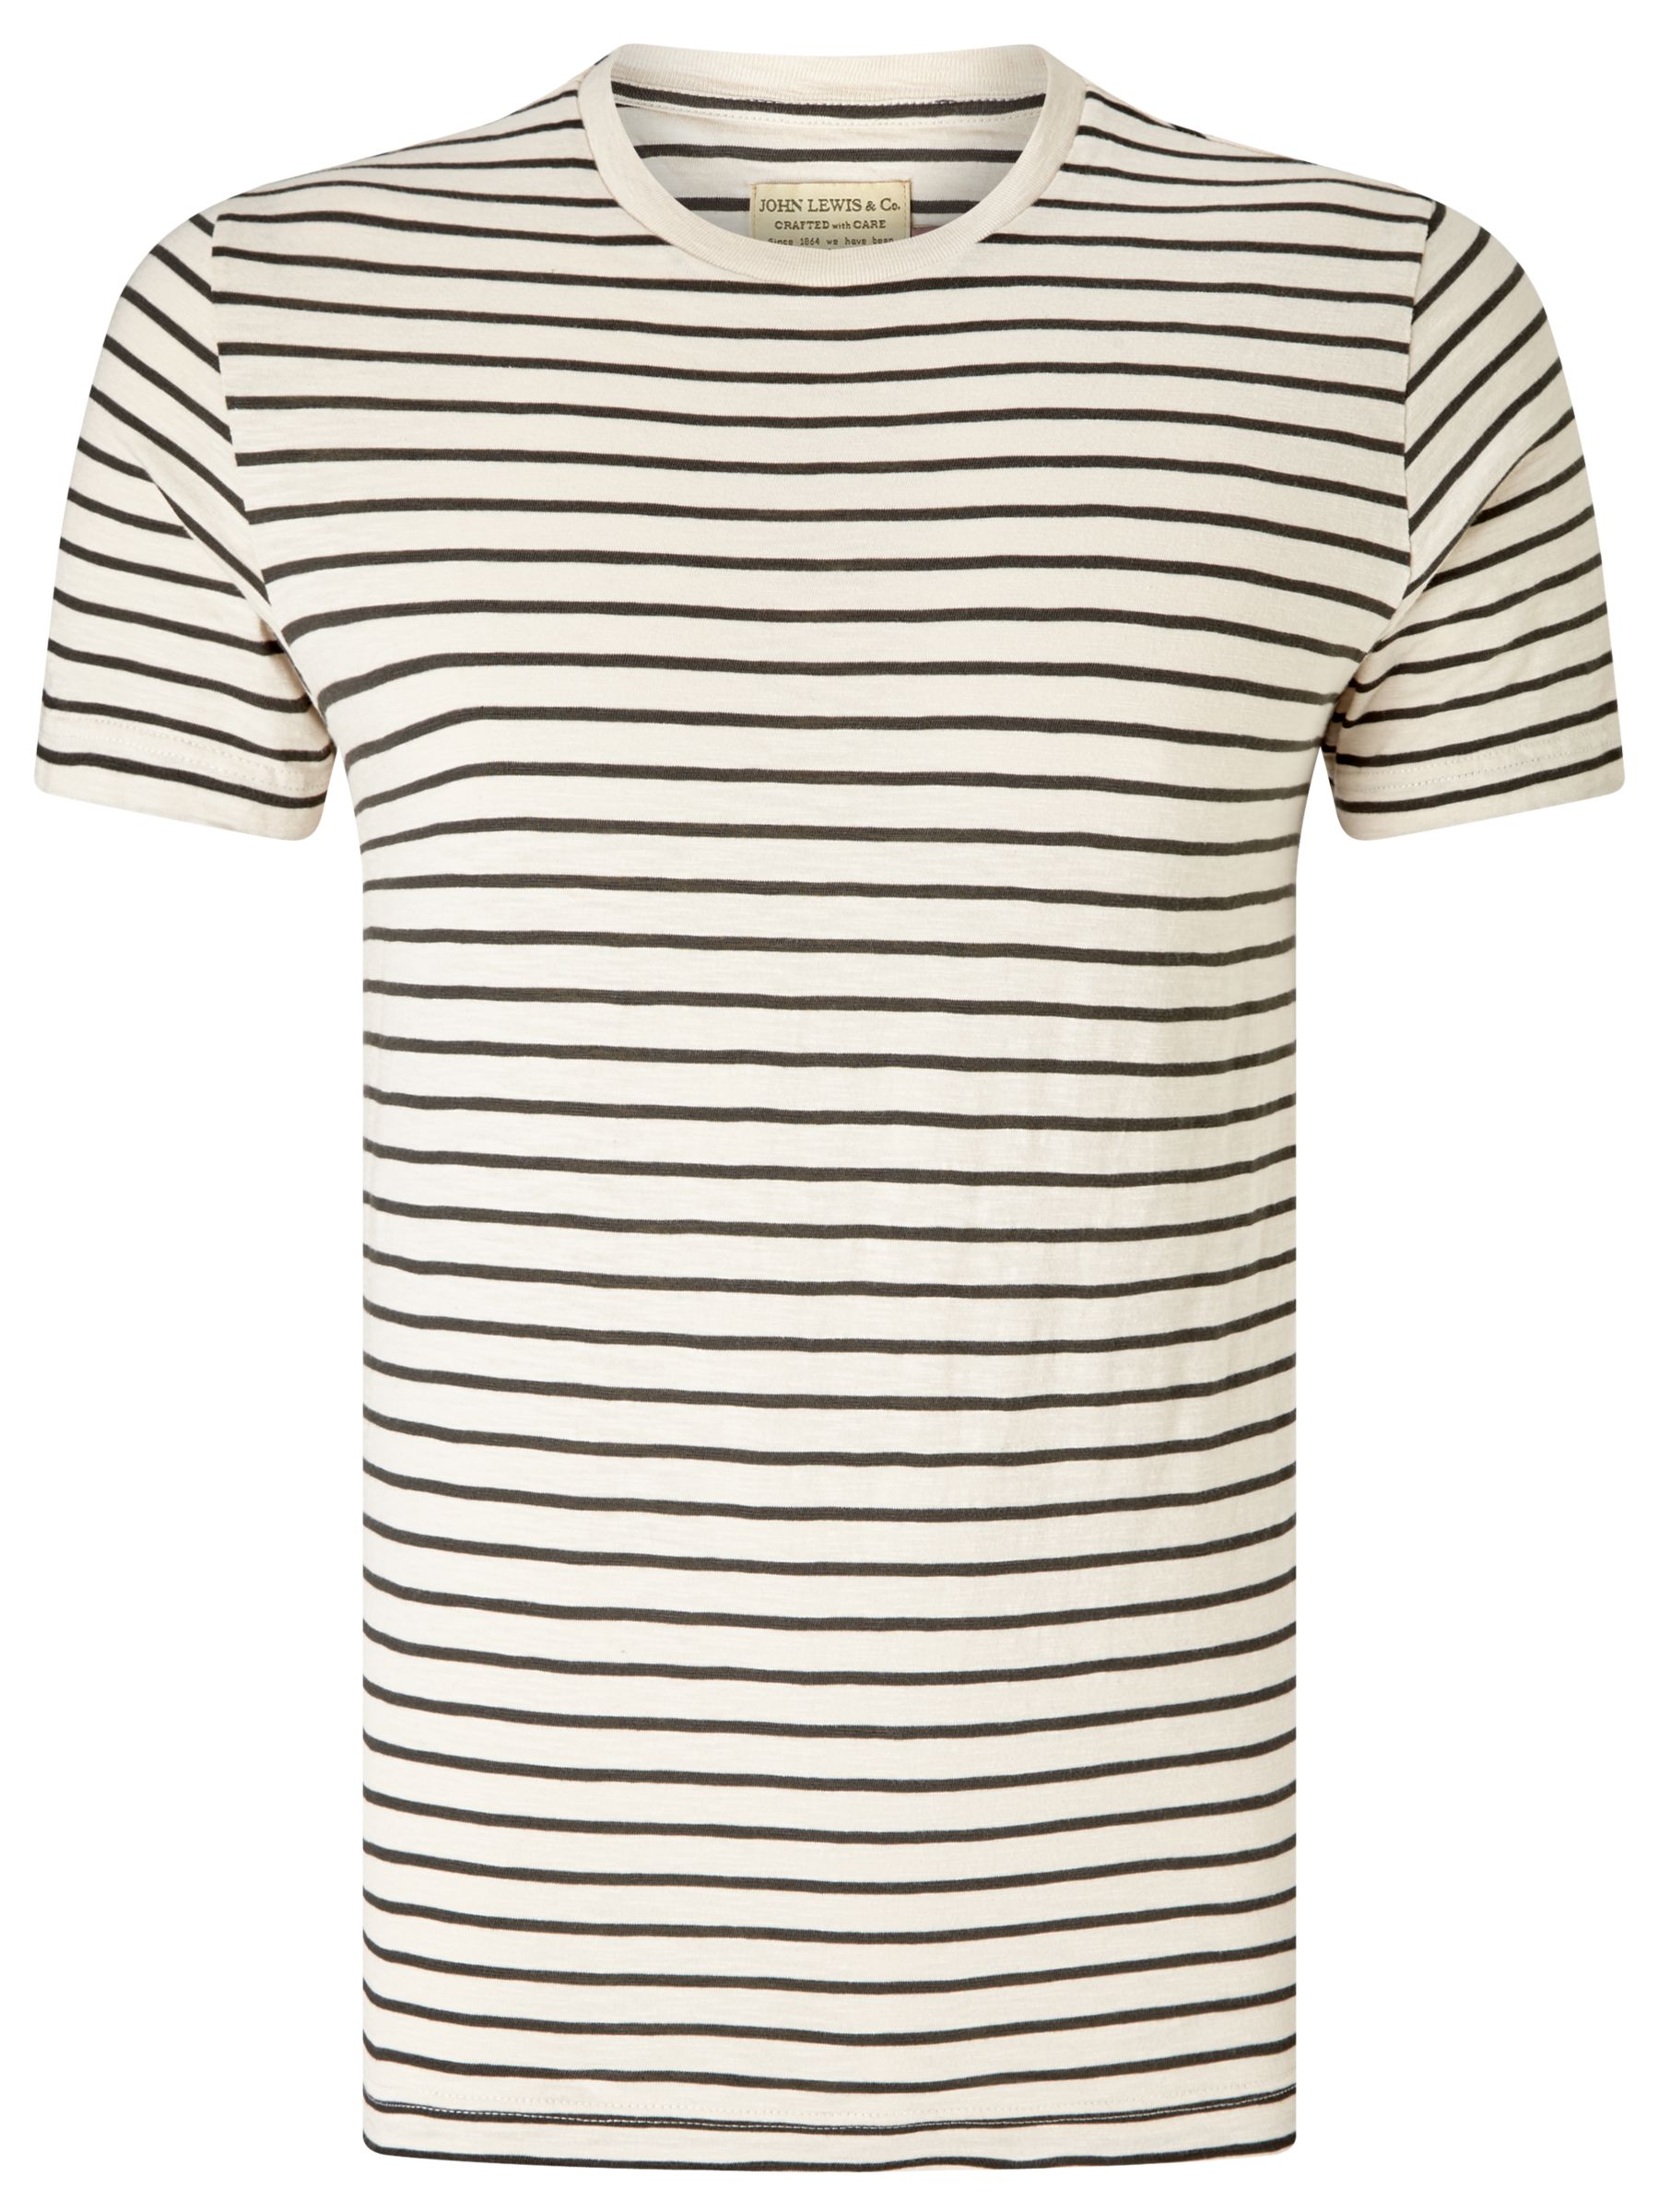 JOHN LEWIS Co. Slub Stripe Crew Neck T-Shirt £25.00 AT vintagedancer.com